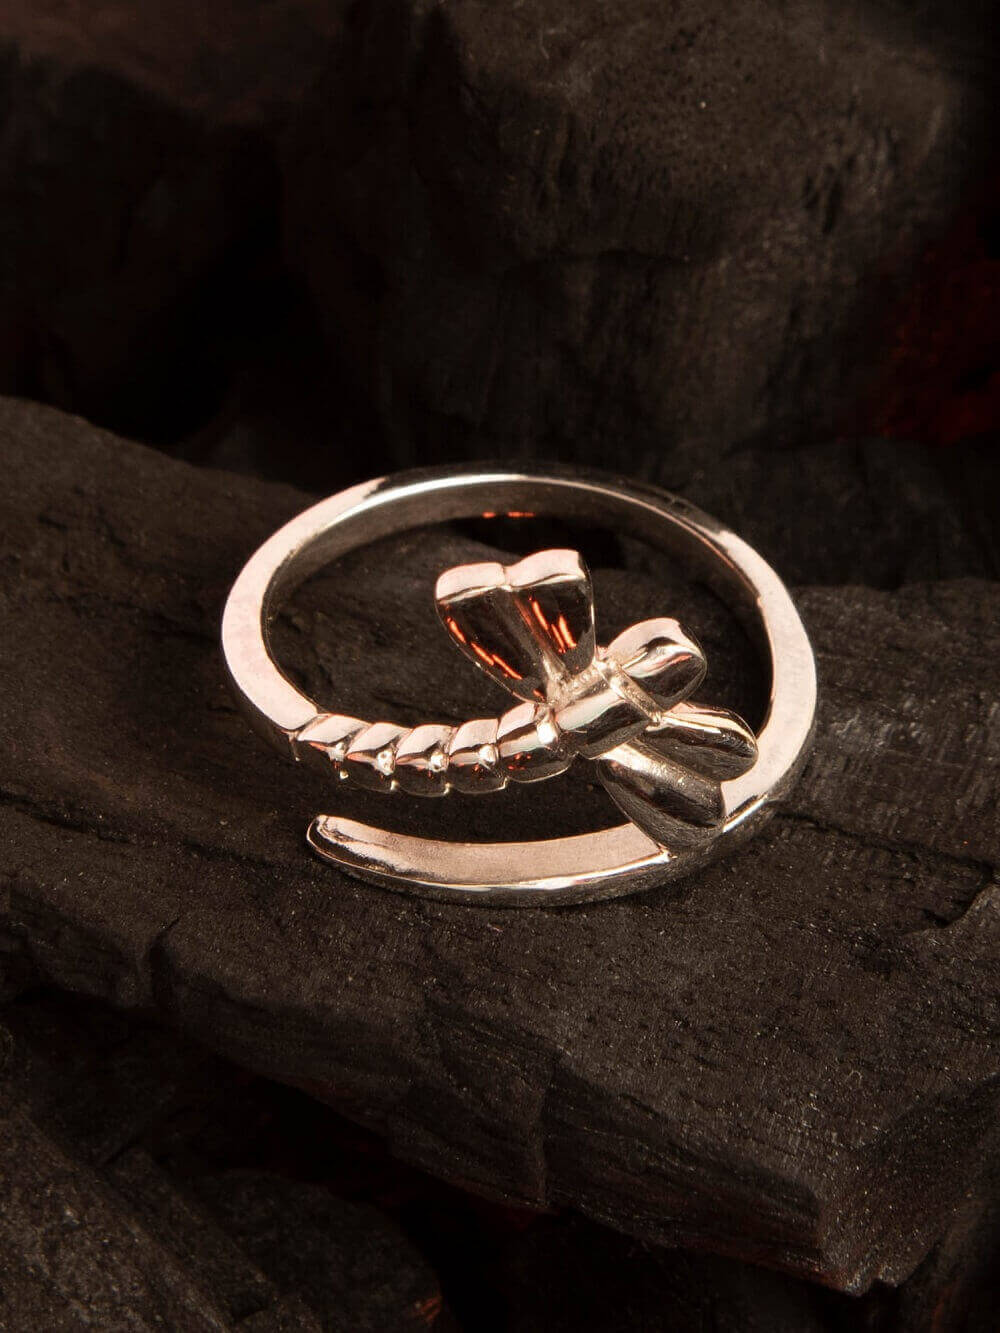 Silver rings for women